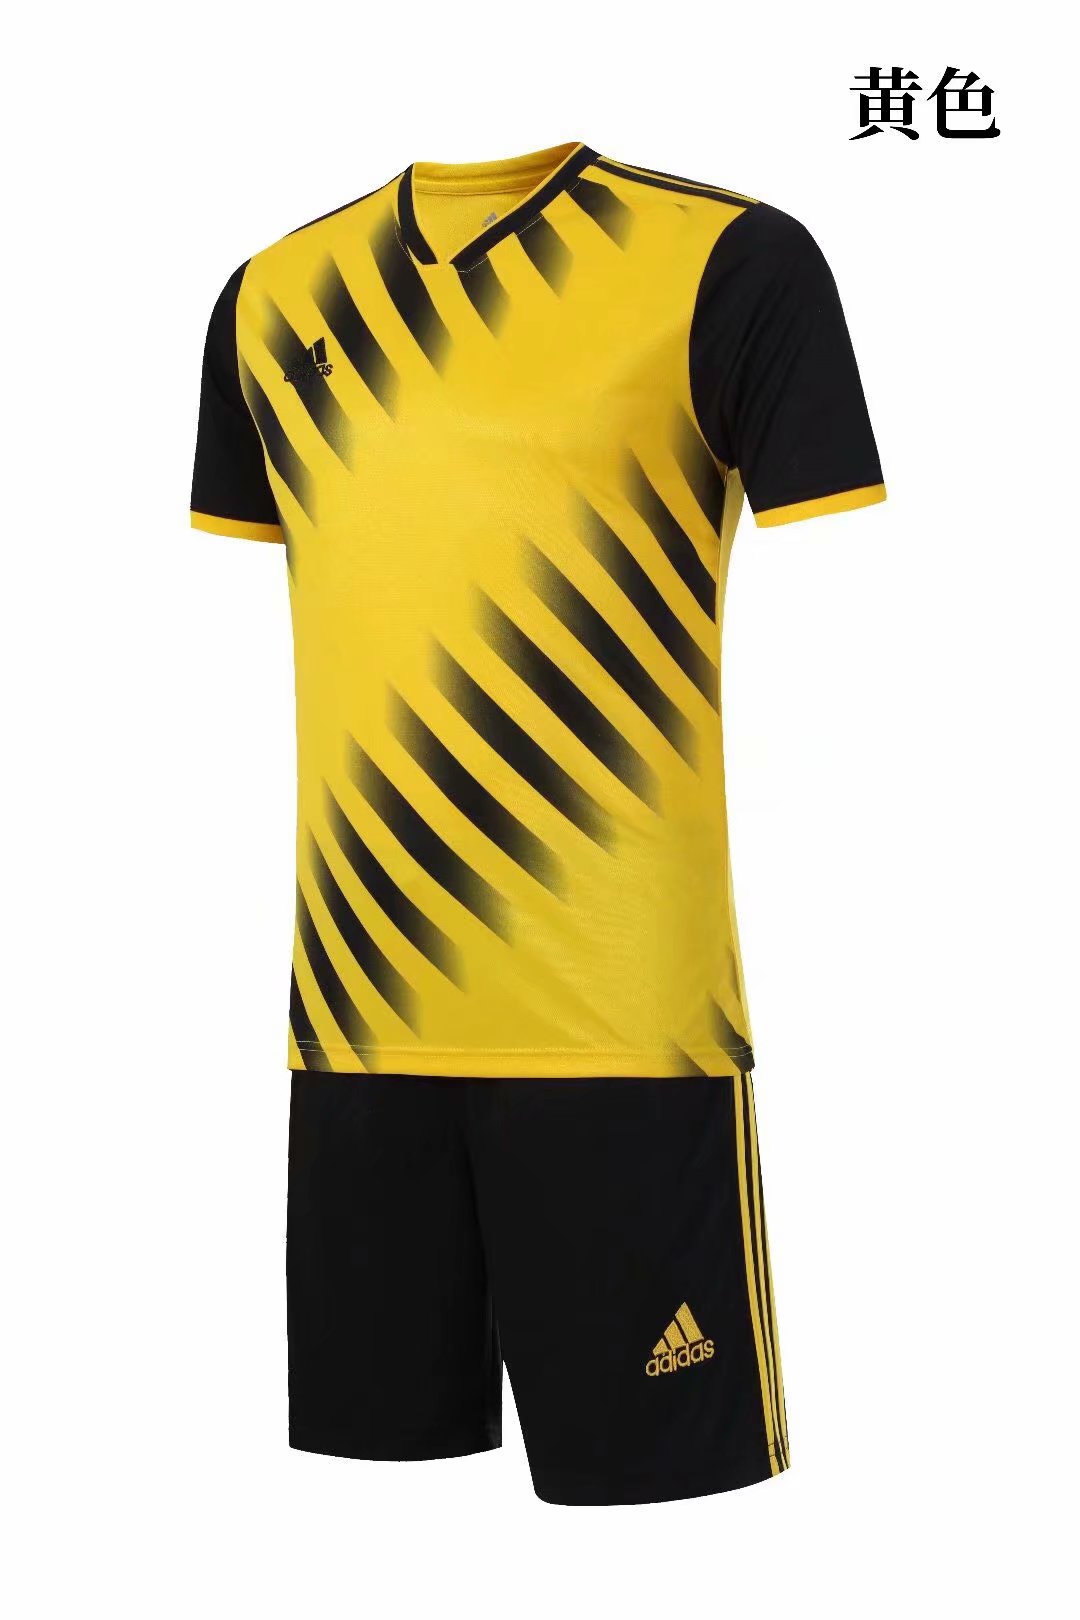 Adidas Soccer Team Uniforms 022